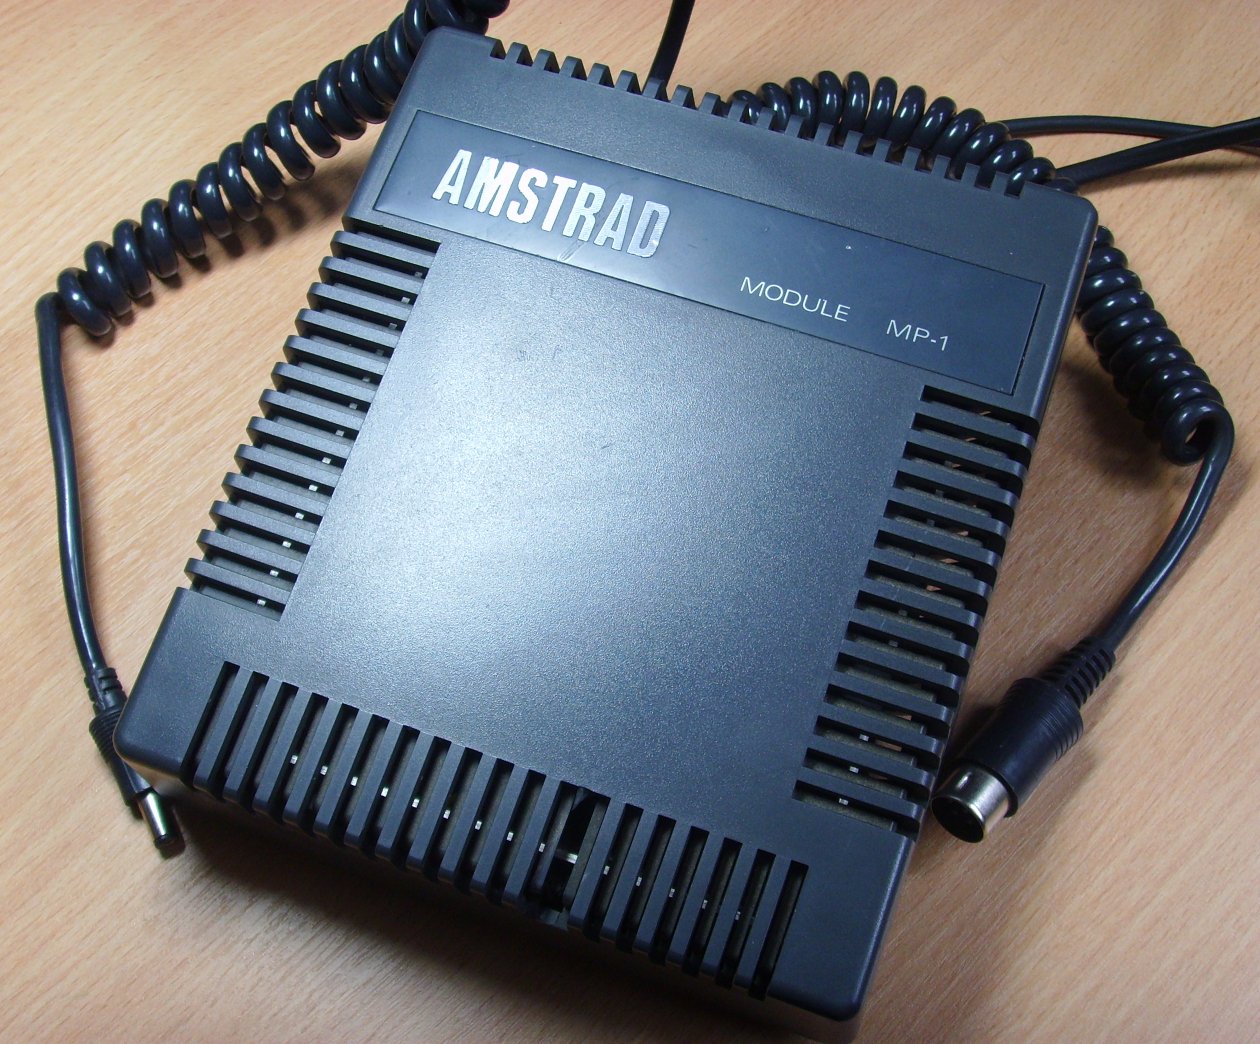 Amstrad CPC464 - MP-1 Modulator/Power Supply